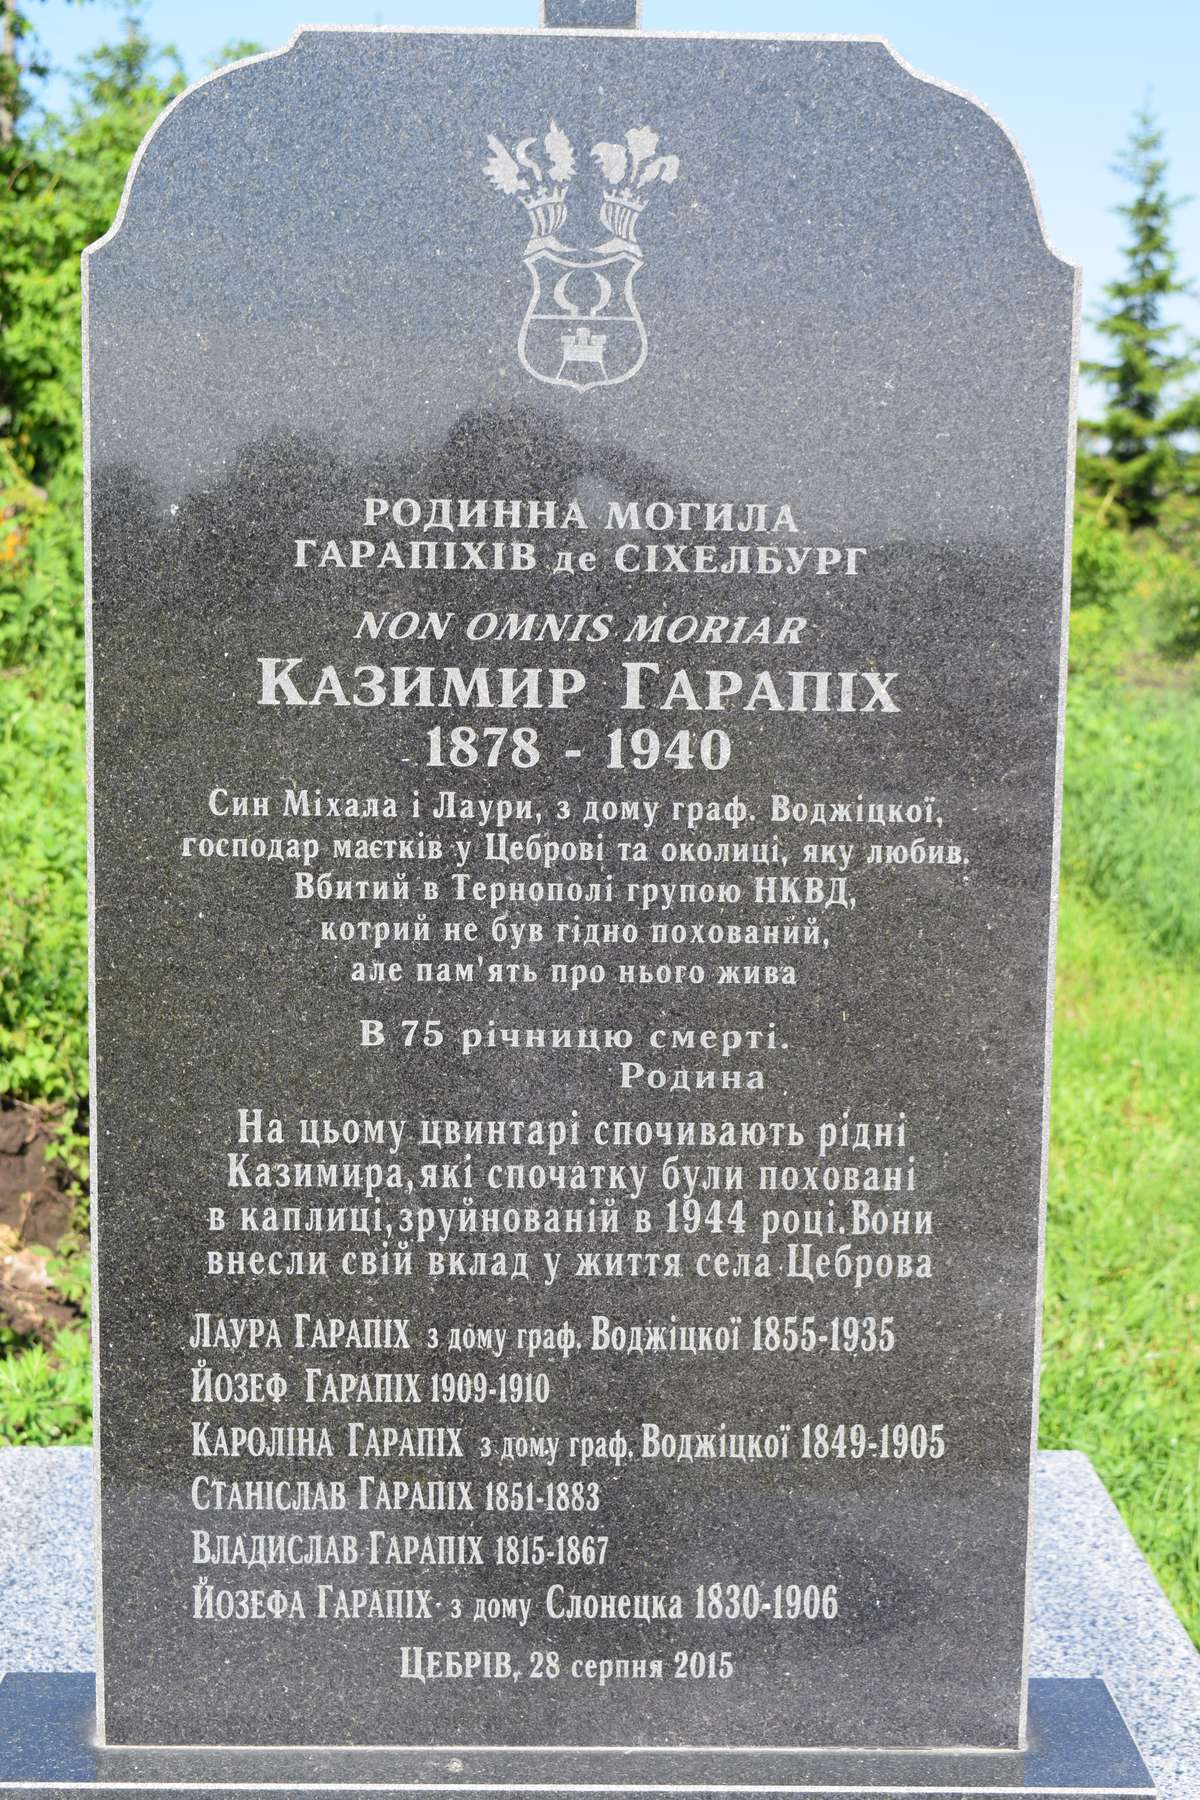 Inscription from the gravestone of the Garapich family. Cemetery in Cebrów